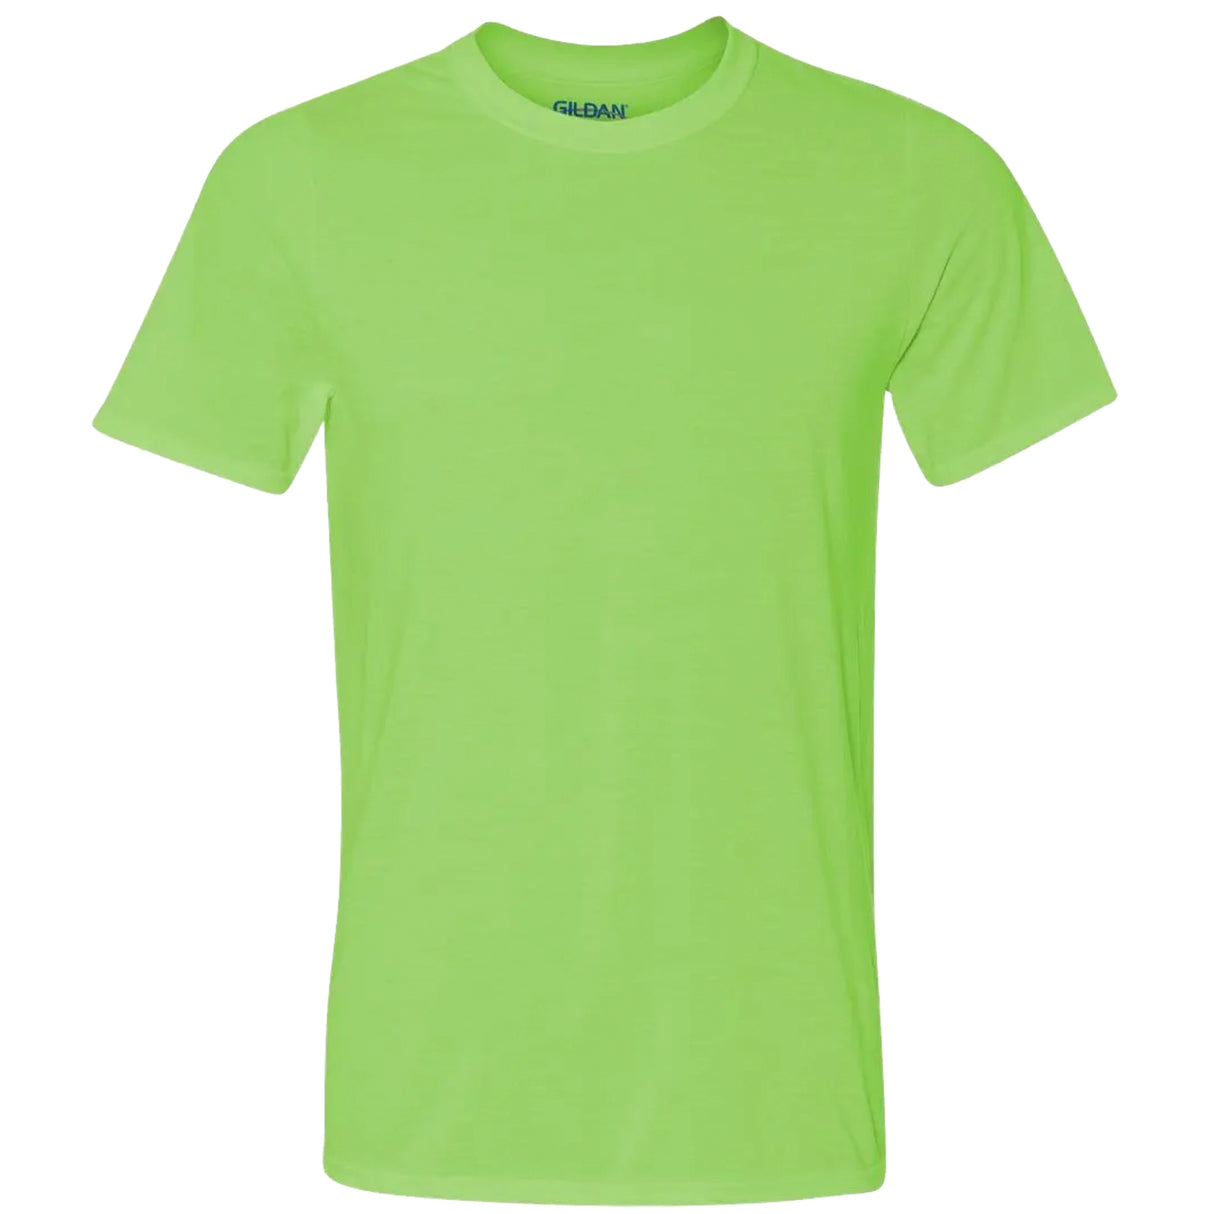 performance t shirt short sleeve lime green